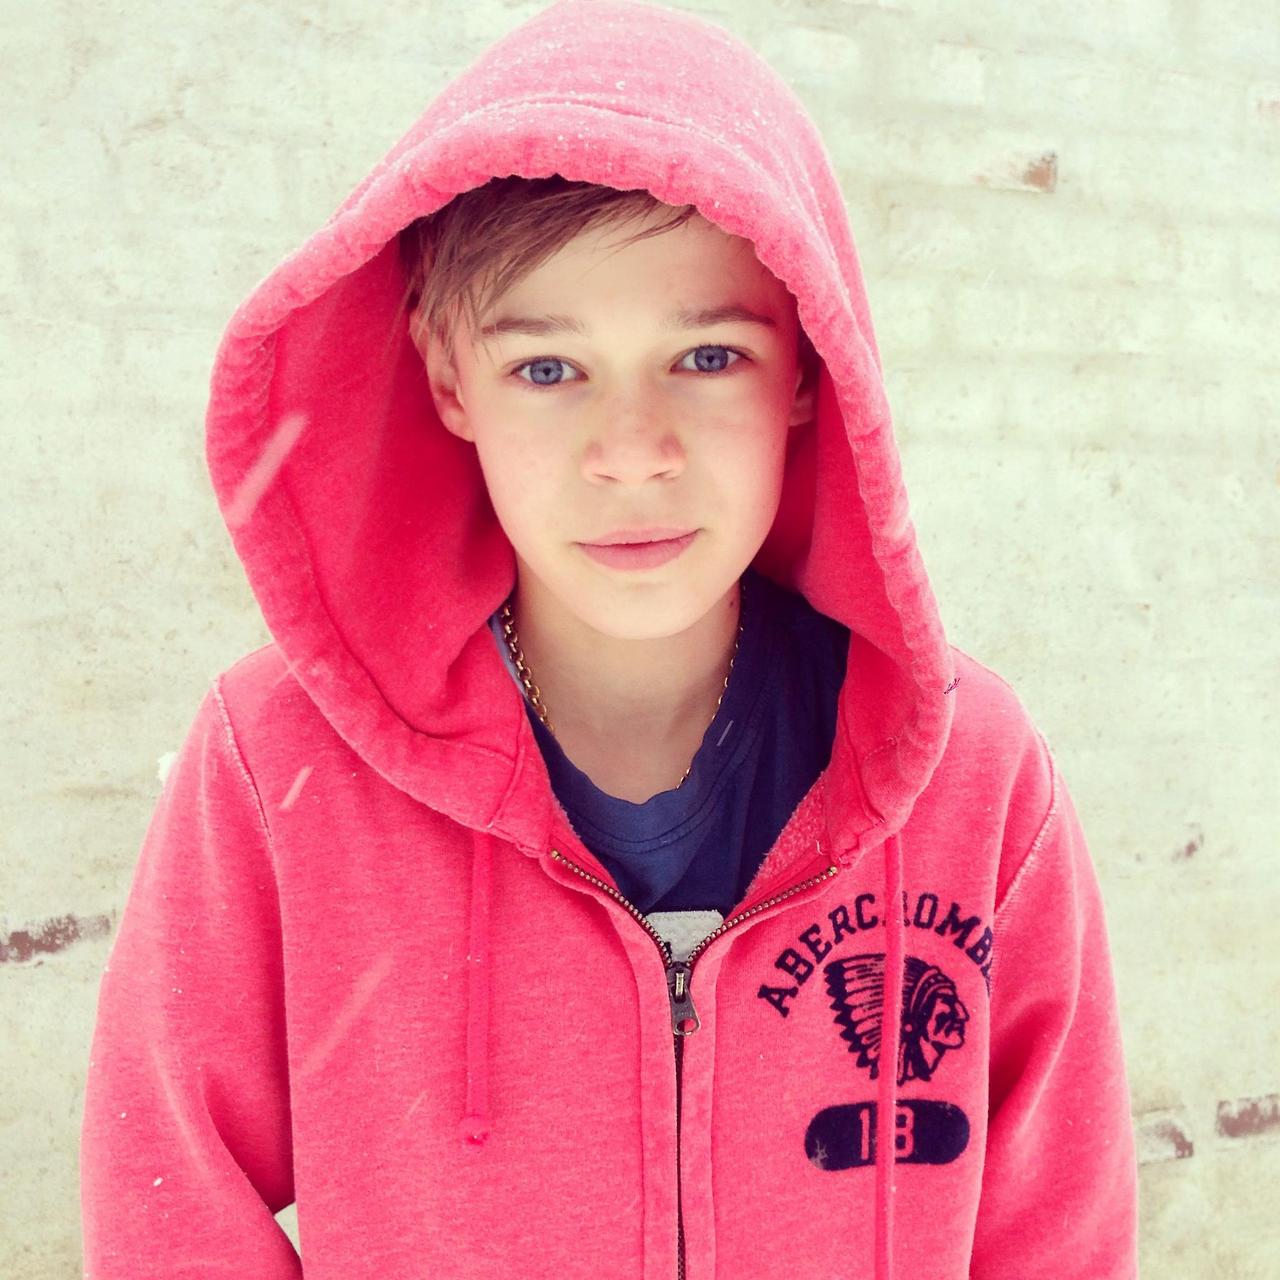 Фотка парня 14. Бенджамин Ласниер 13 лет.